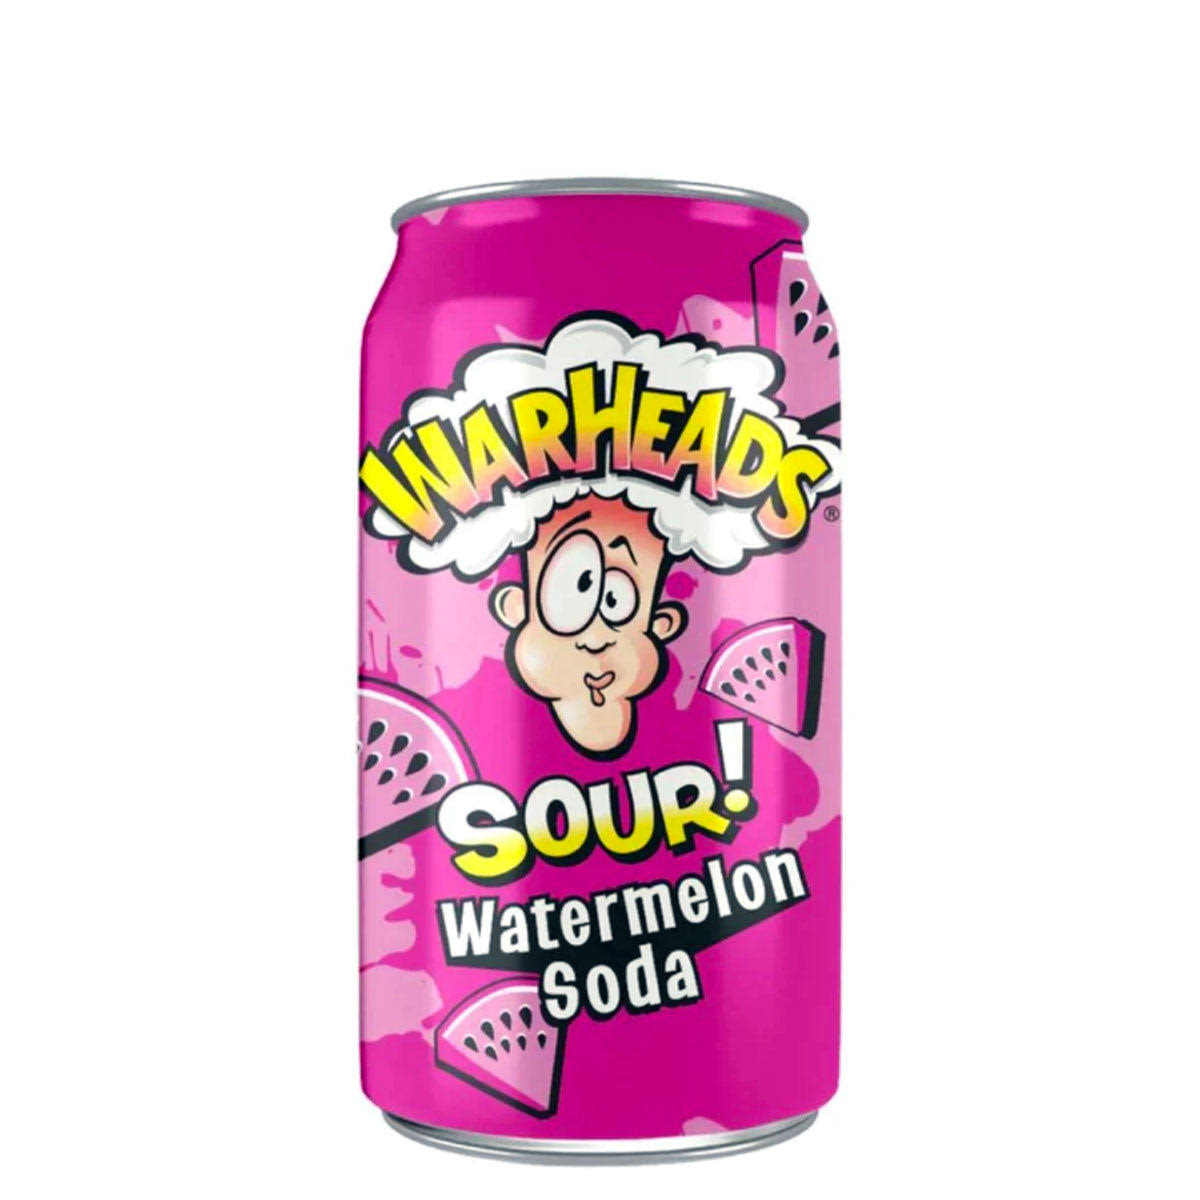 Warheads - Sour Watermelon Soda